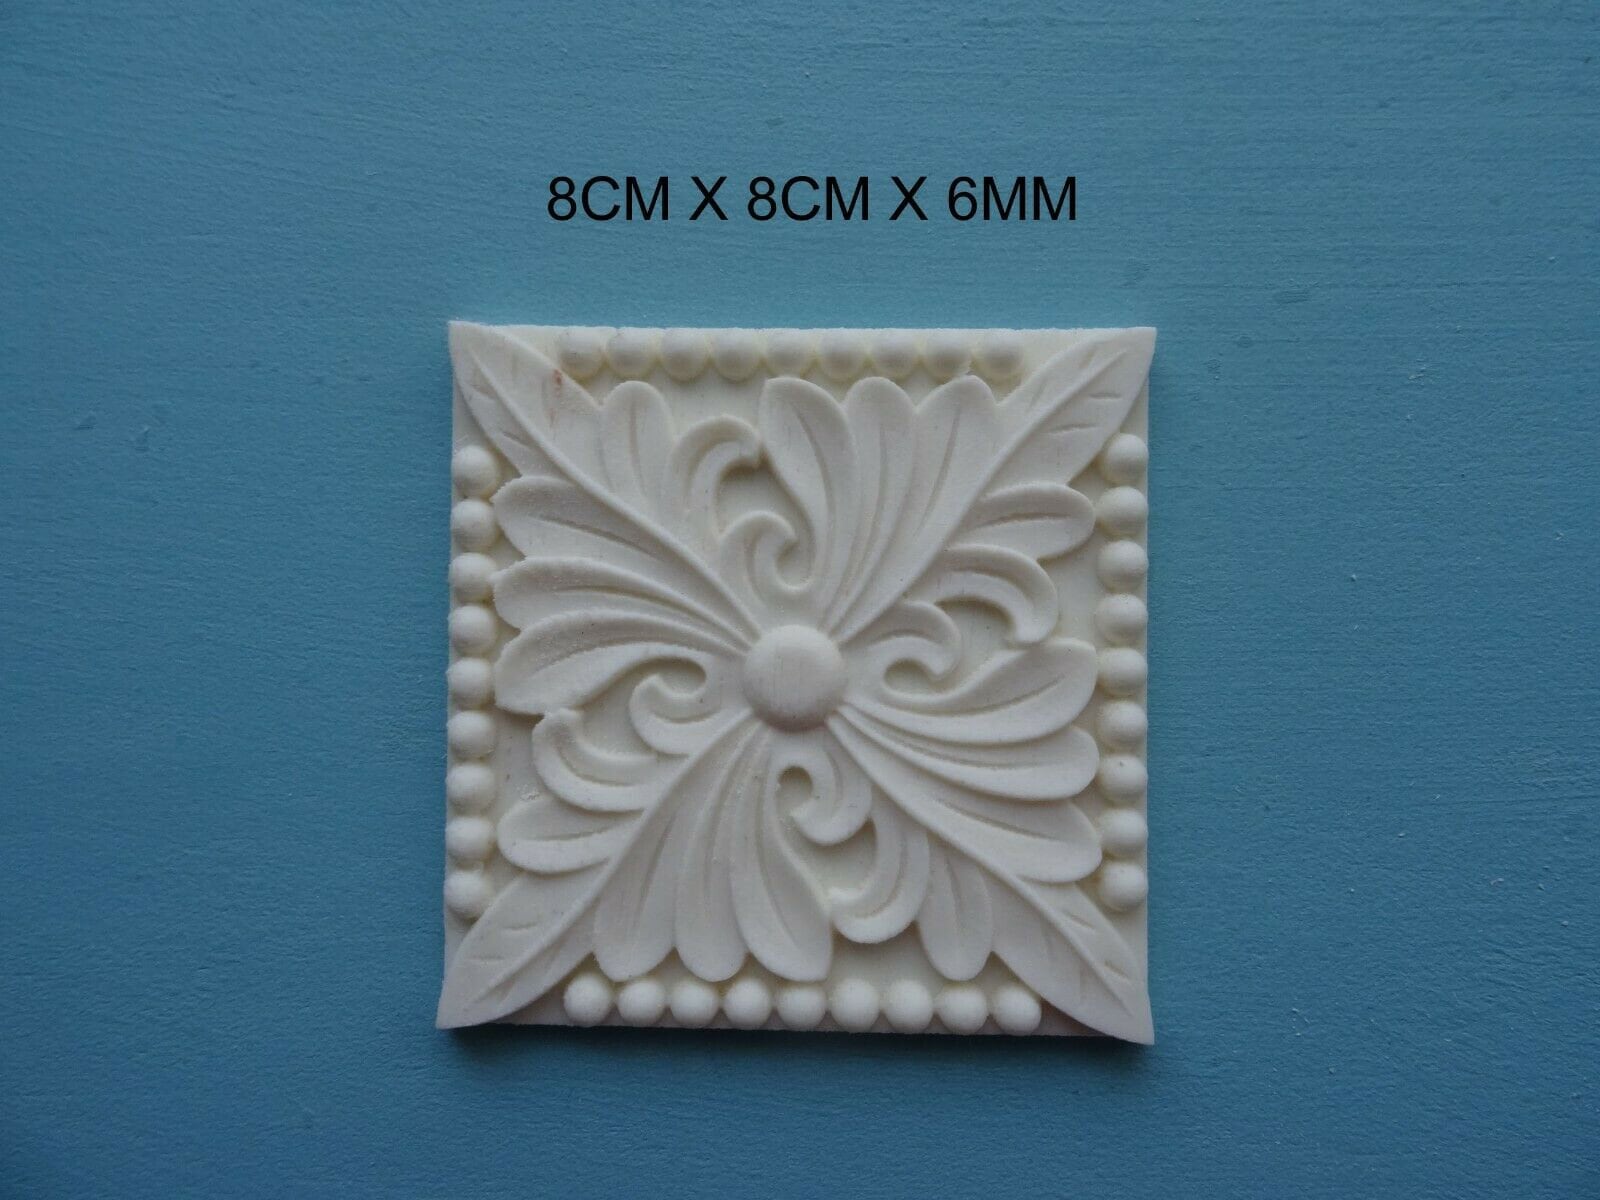 Decorative small square tile furniture moulding appliques onlay CC67 